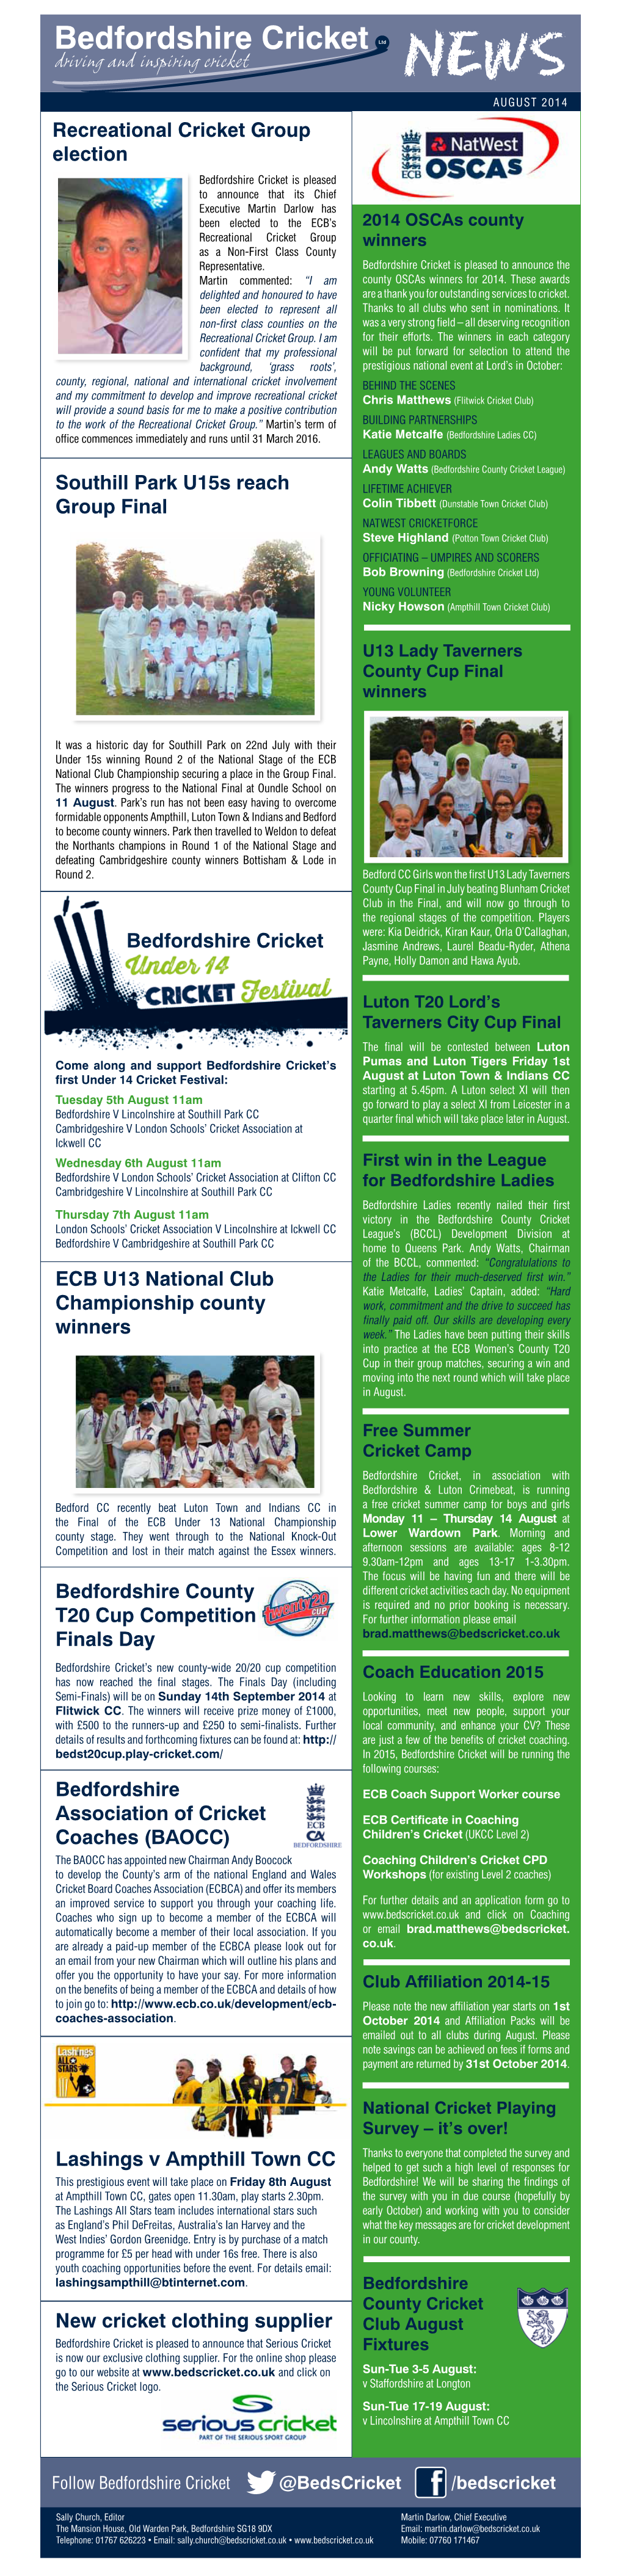 Bedfordshire Cricket Ltd Driving and Inspiring Cricket